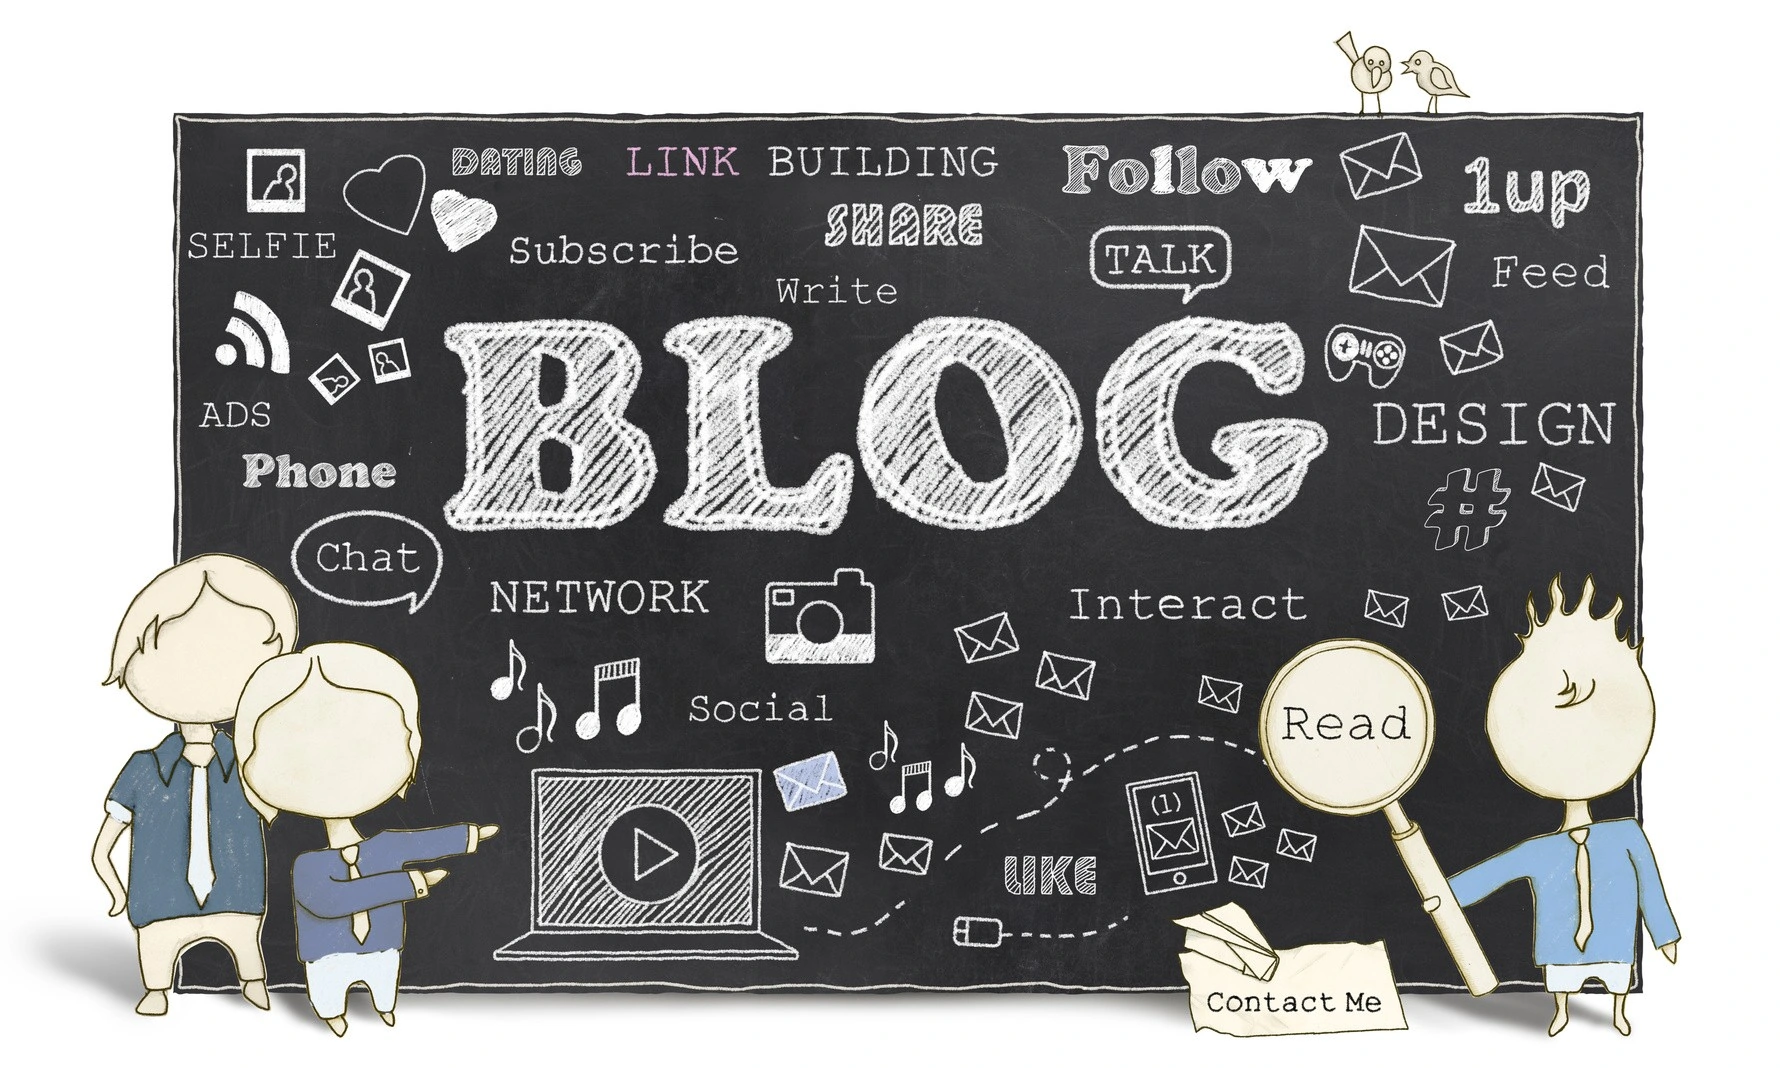 Learn blogging